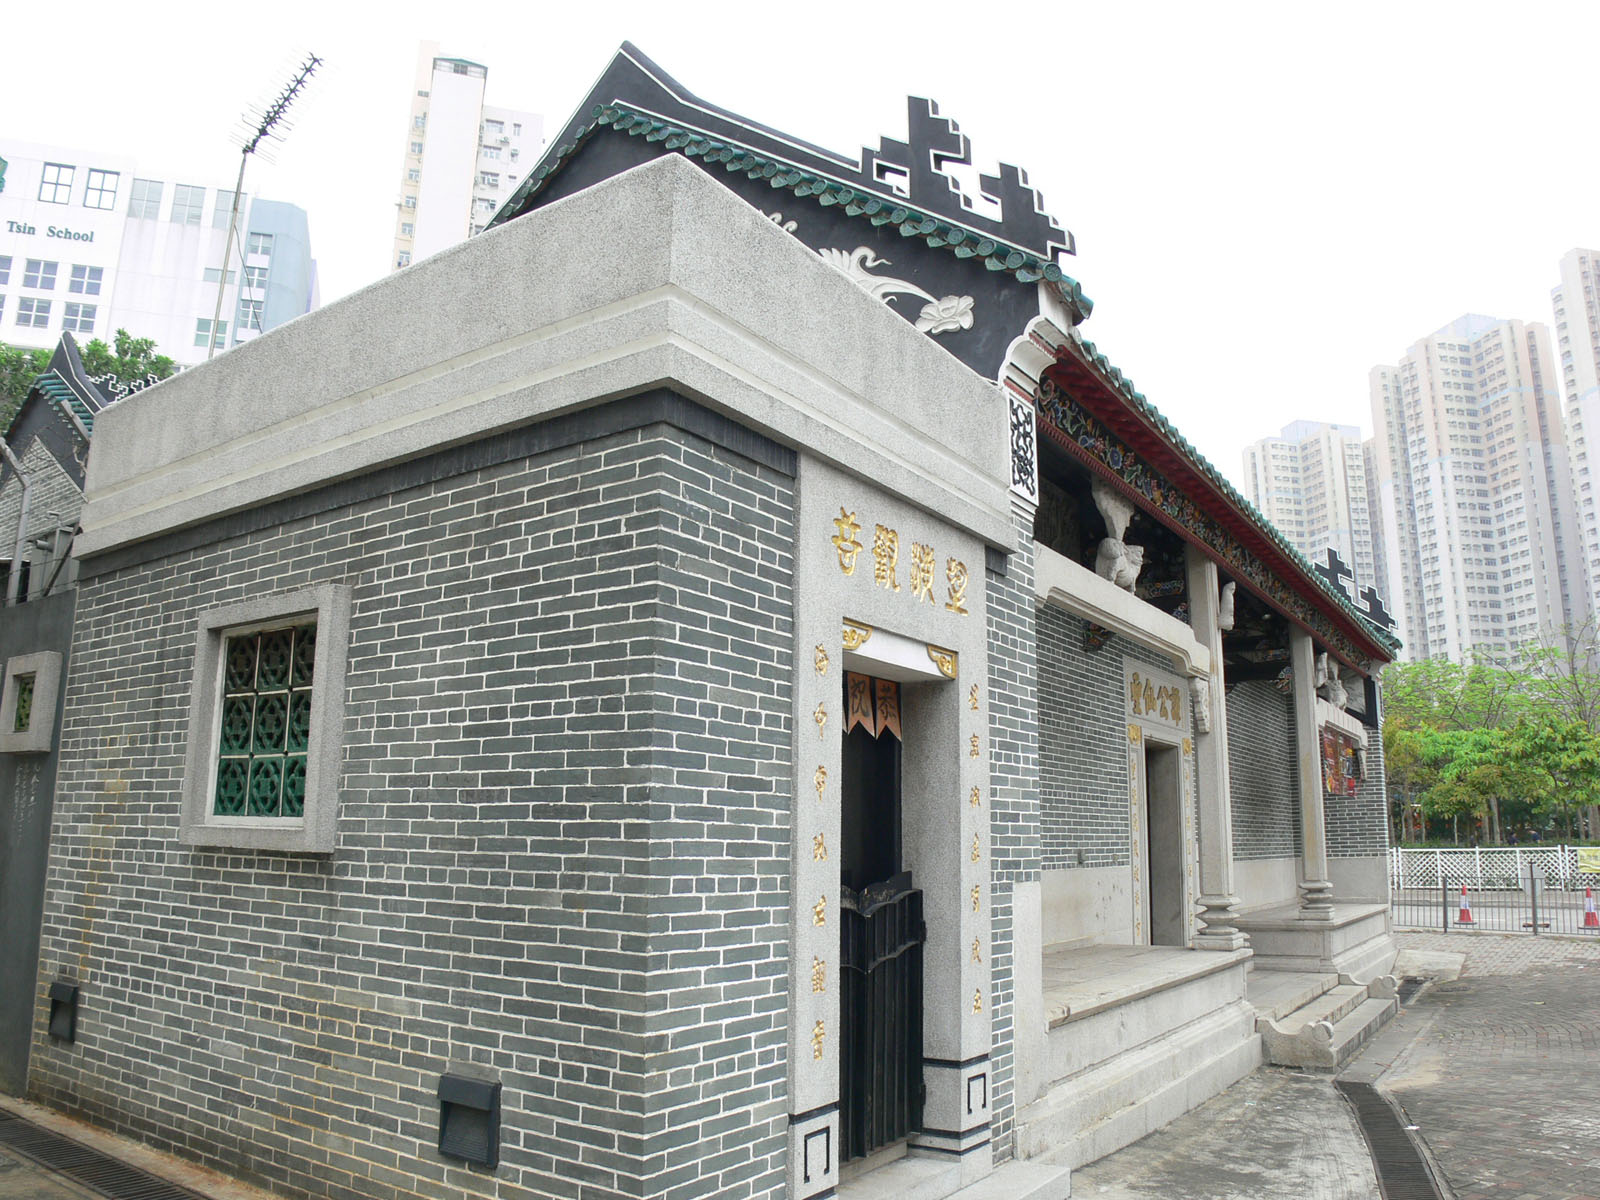 Photo 2: Tam Kung Temple (Shau Kei Wan)